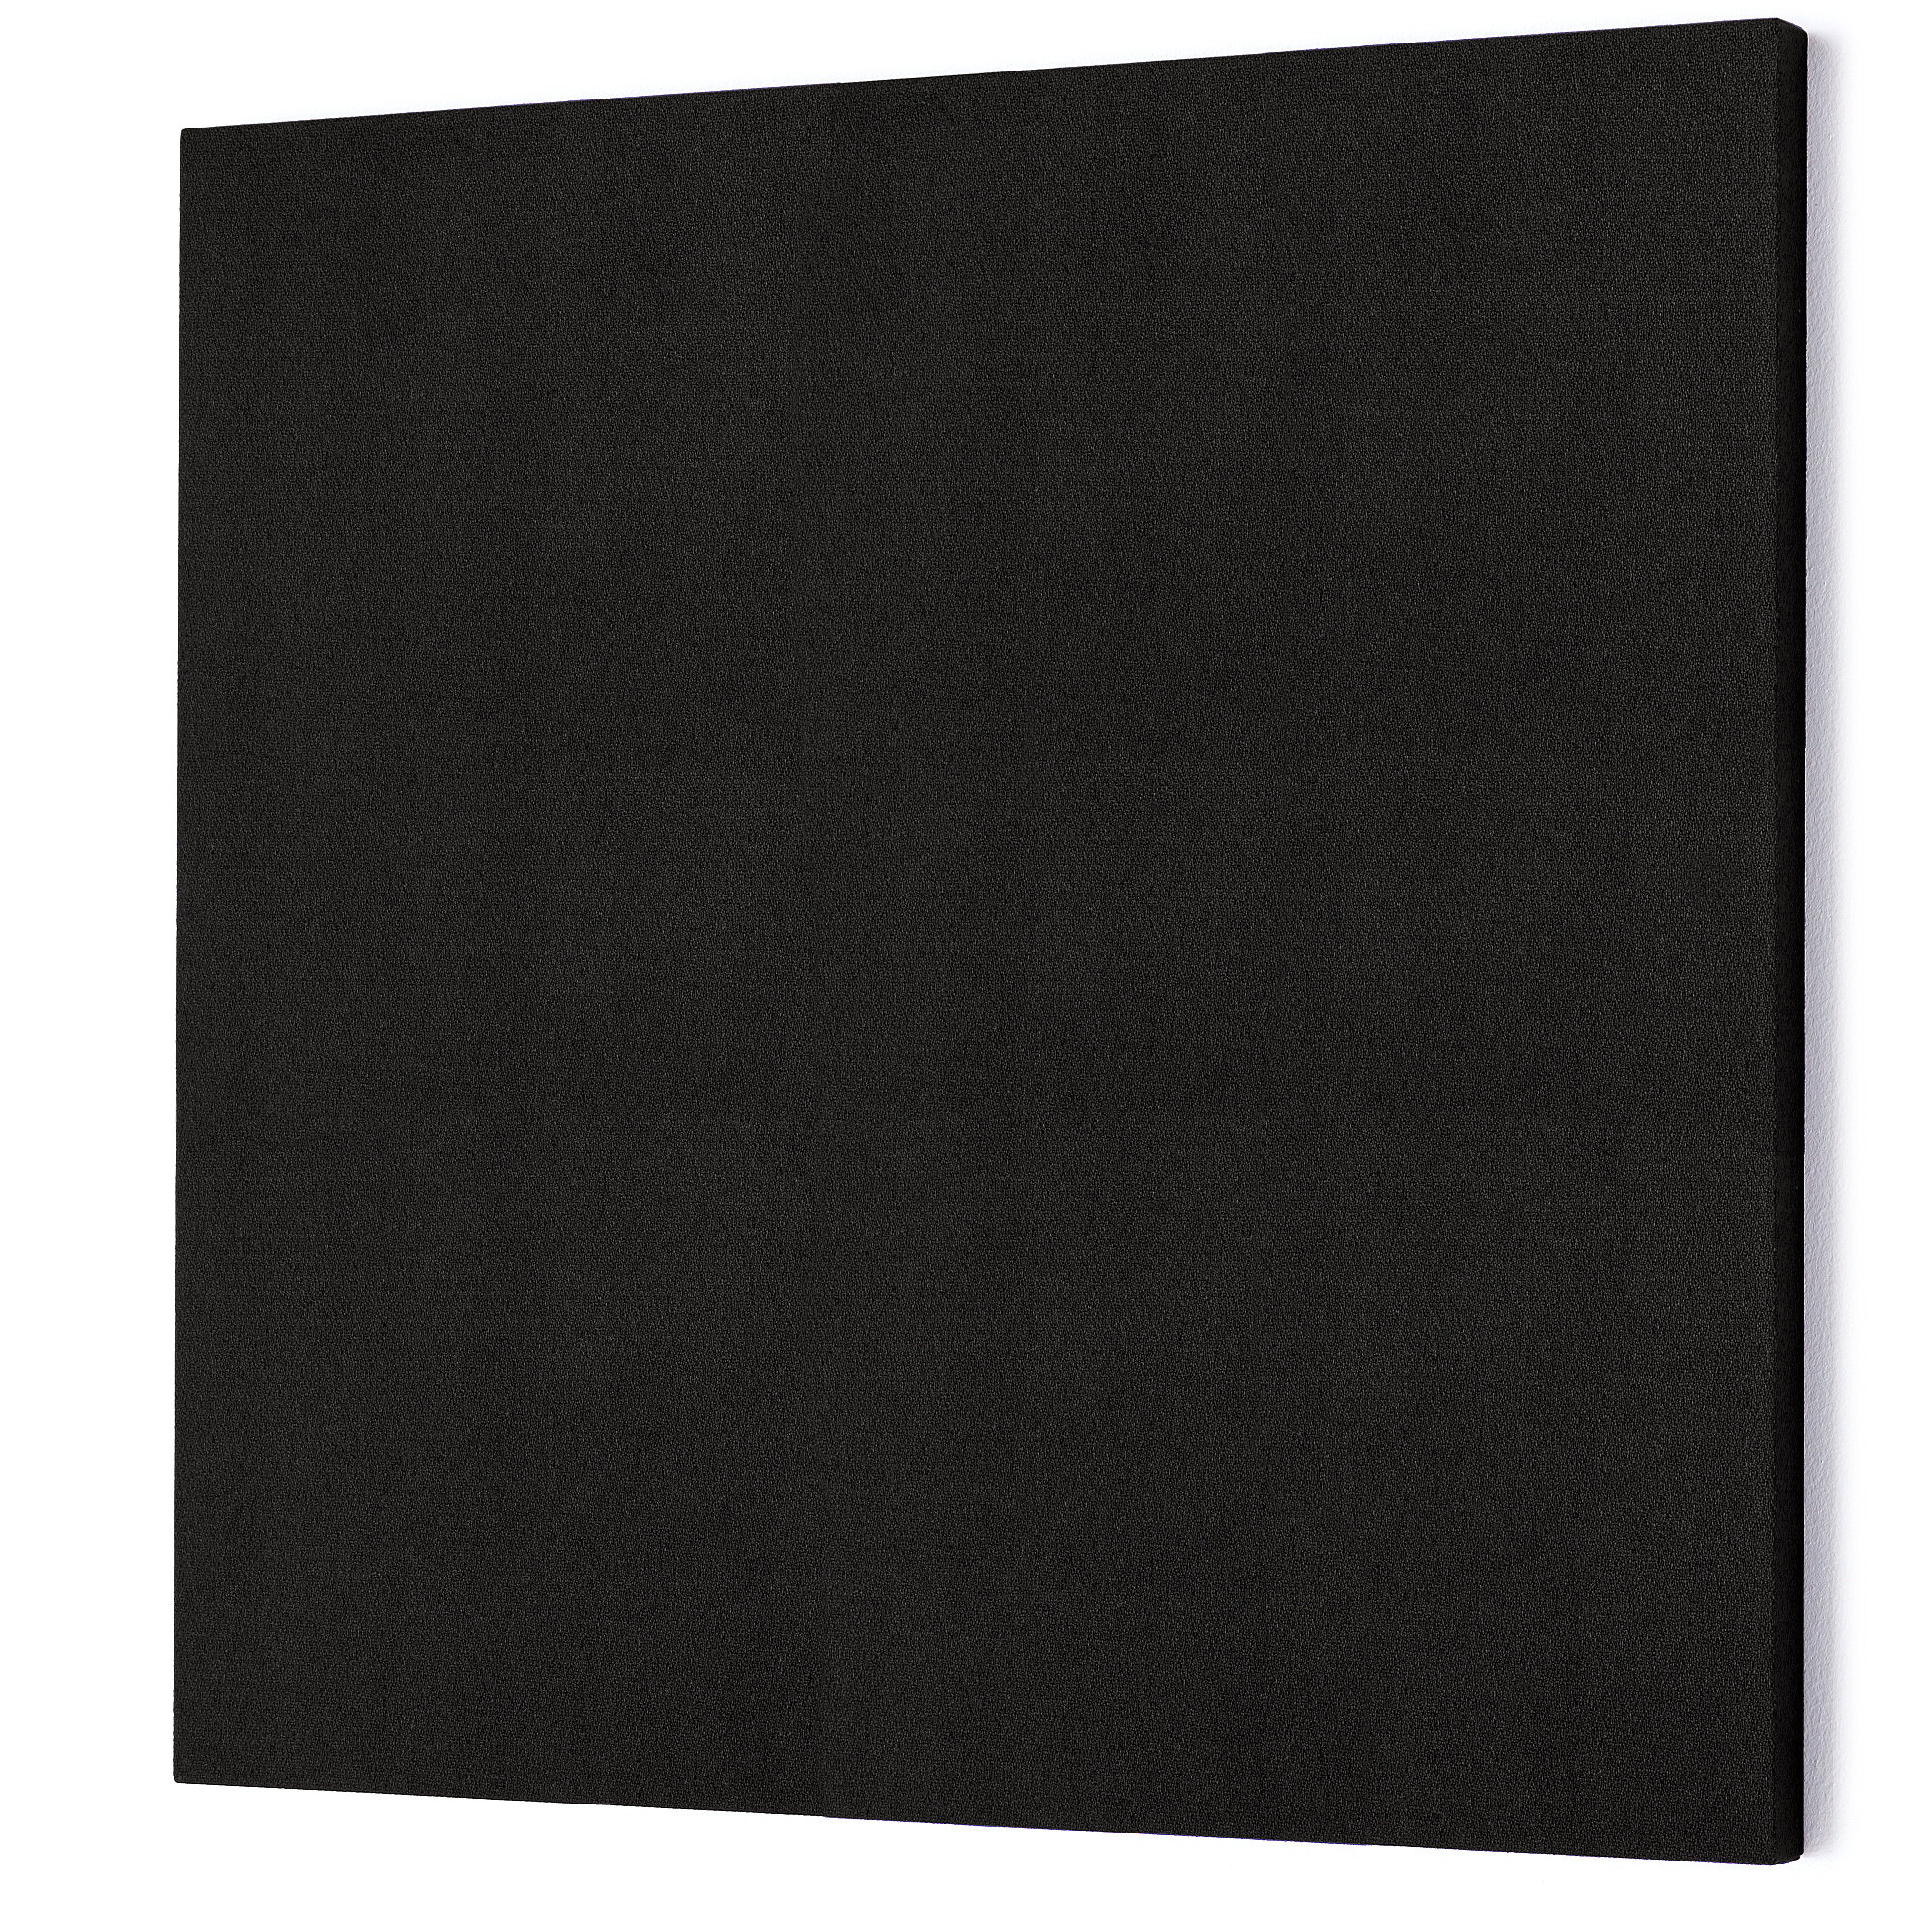 Akustický panel POLY, čtverec, 1180x1180x56 mm, černý